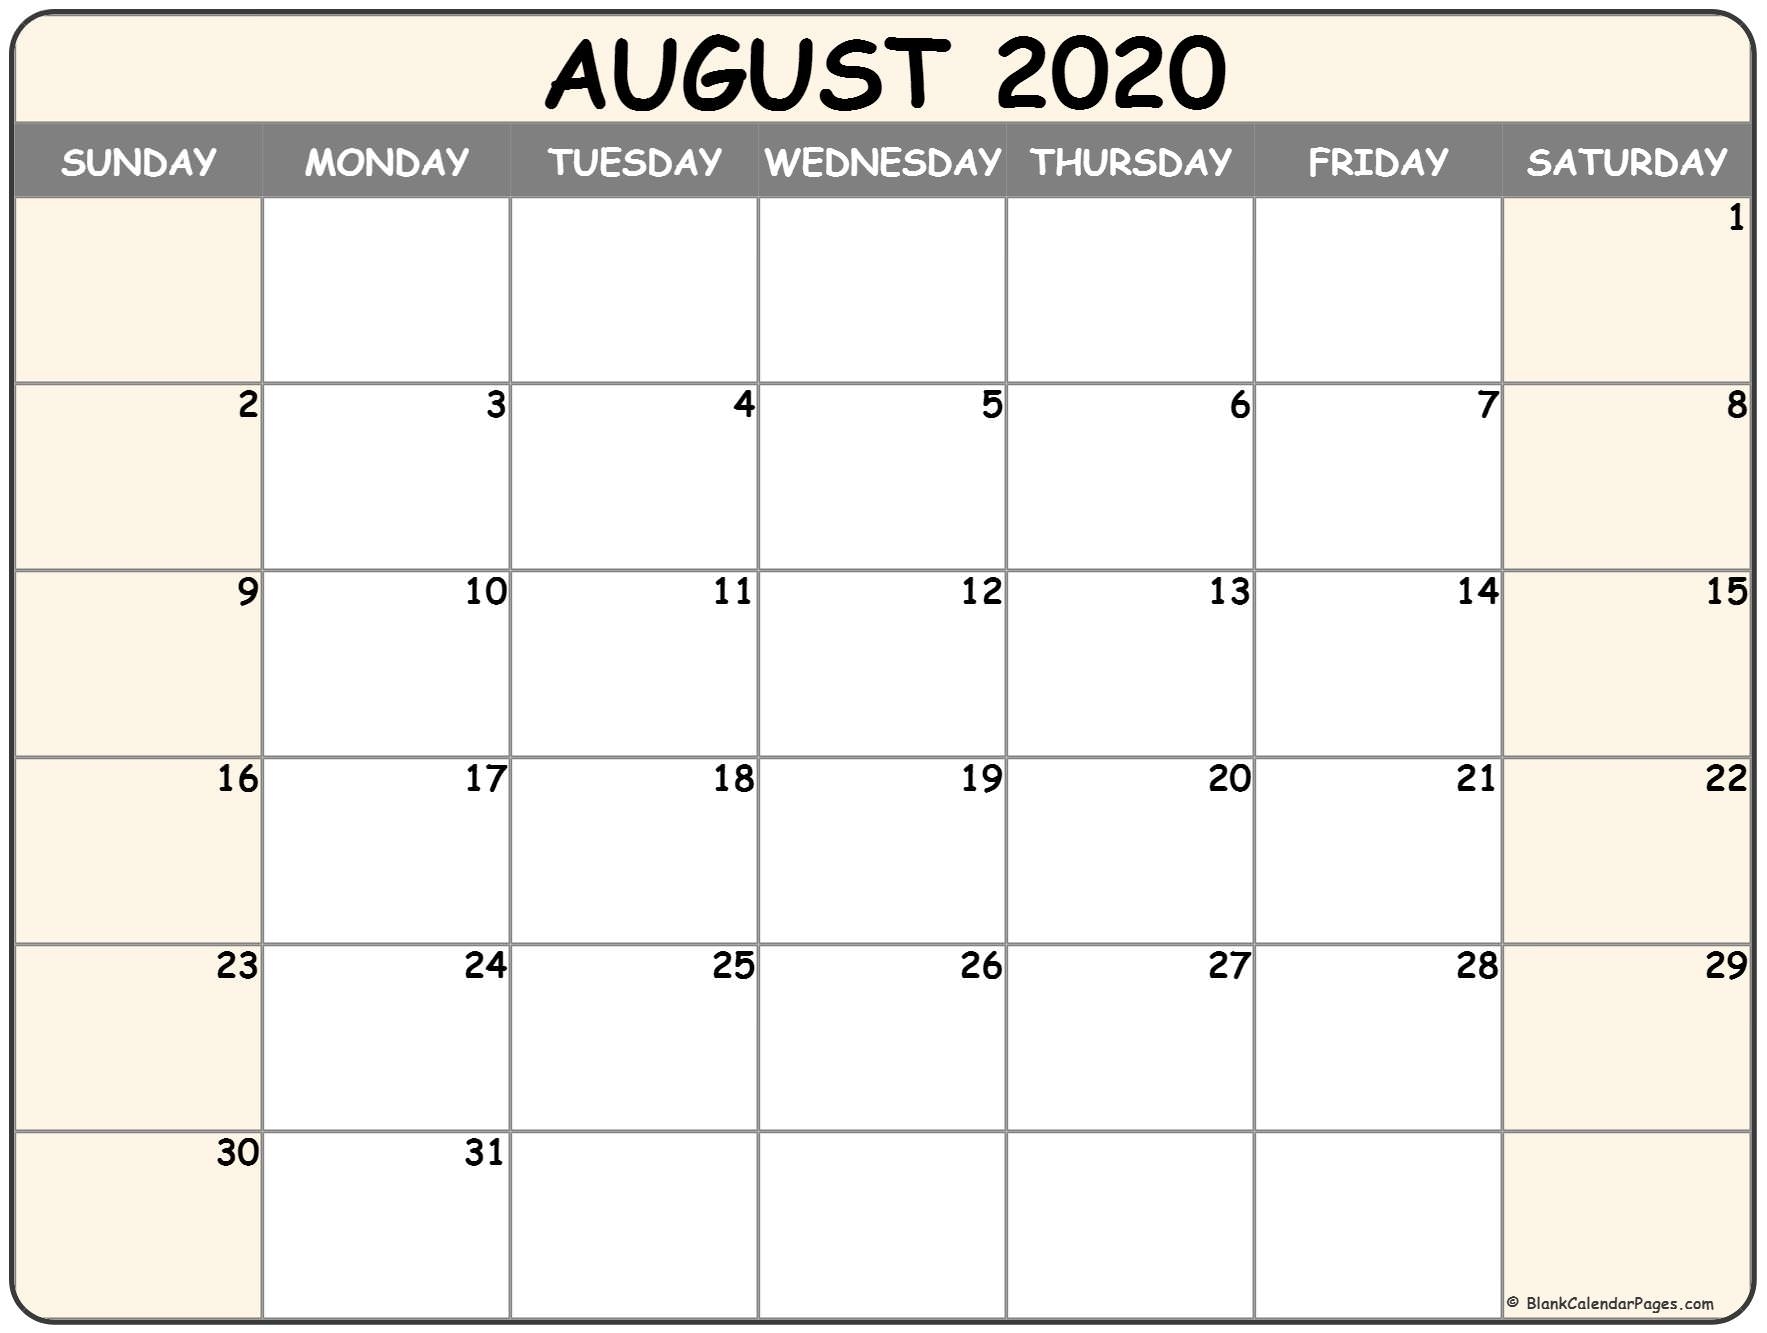 Catch August Monthly Calendar Landscaoe